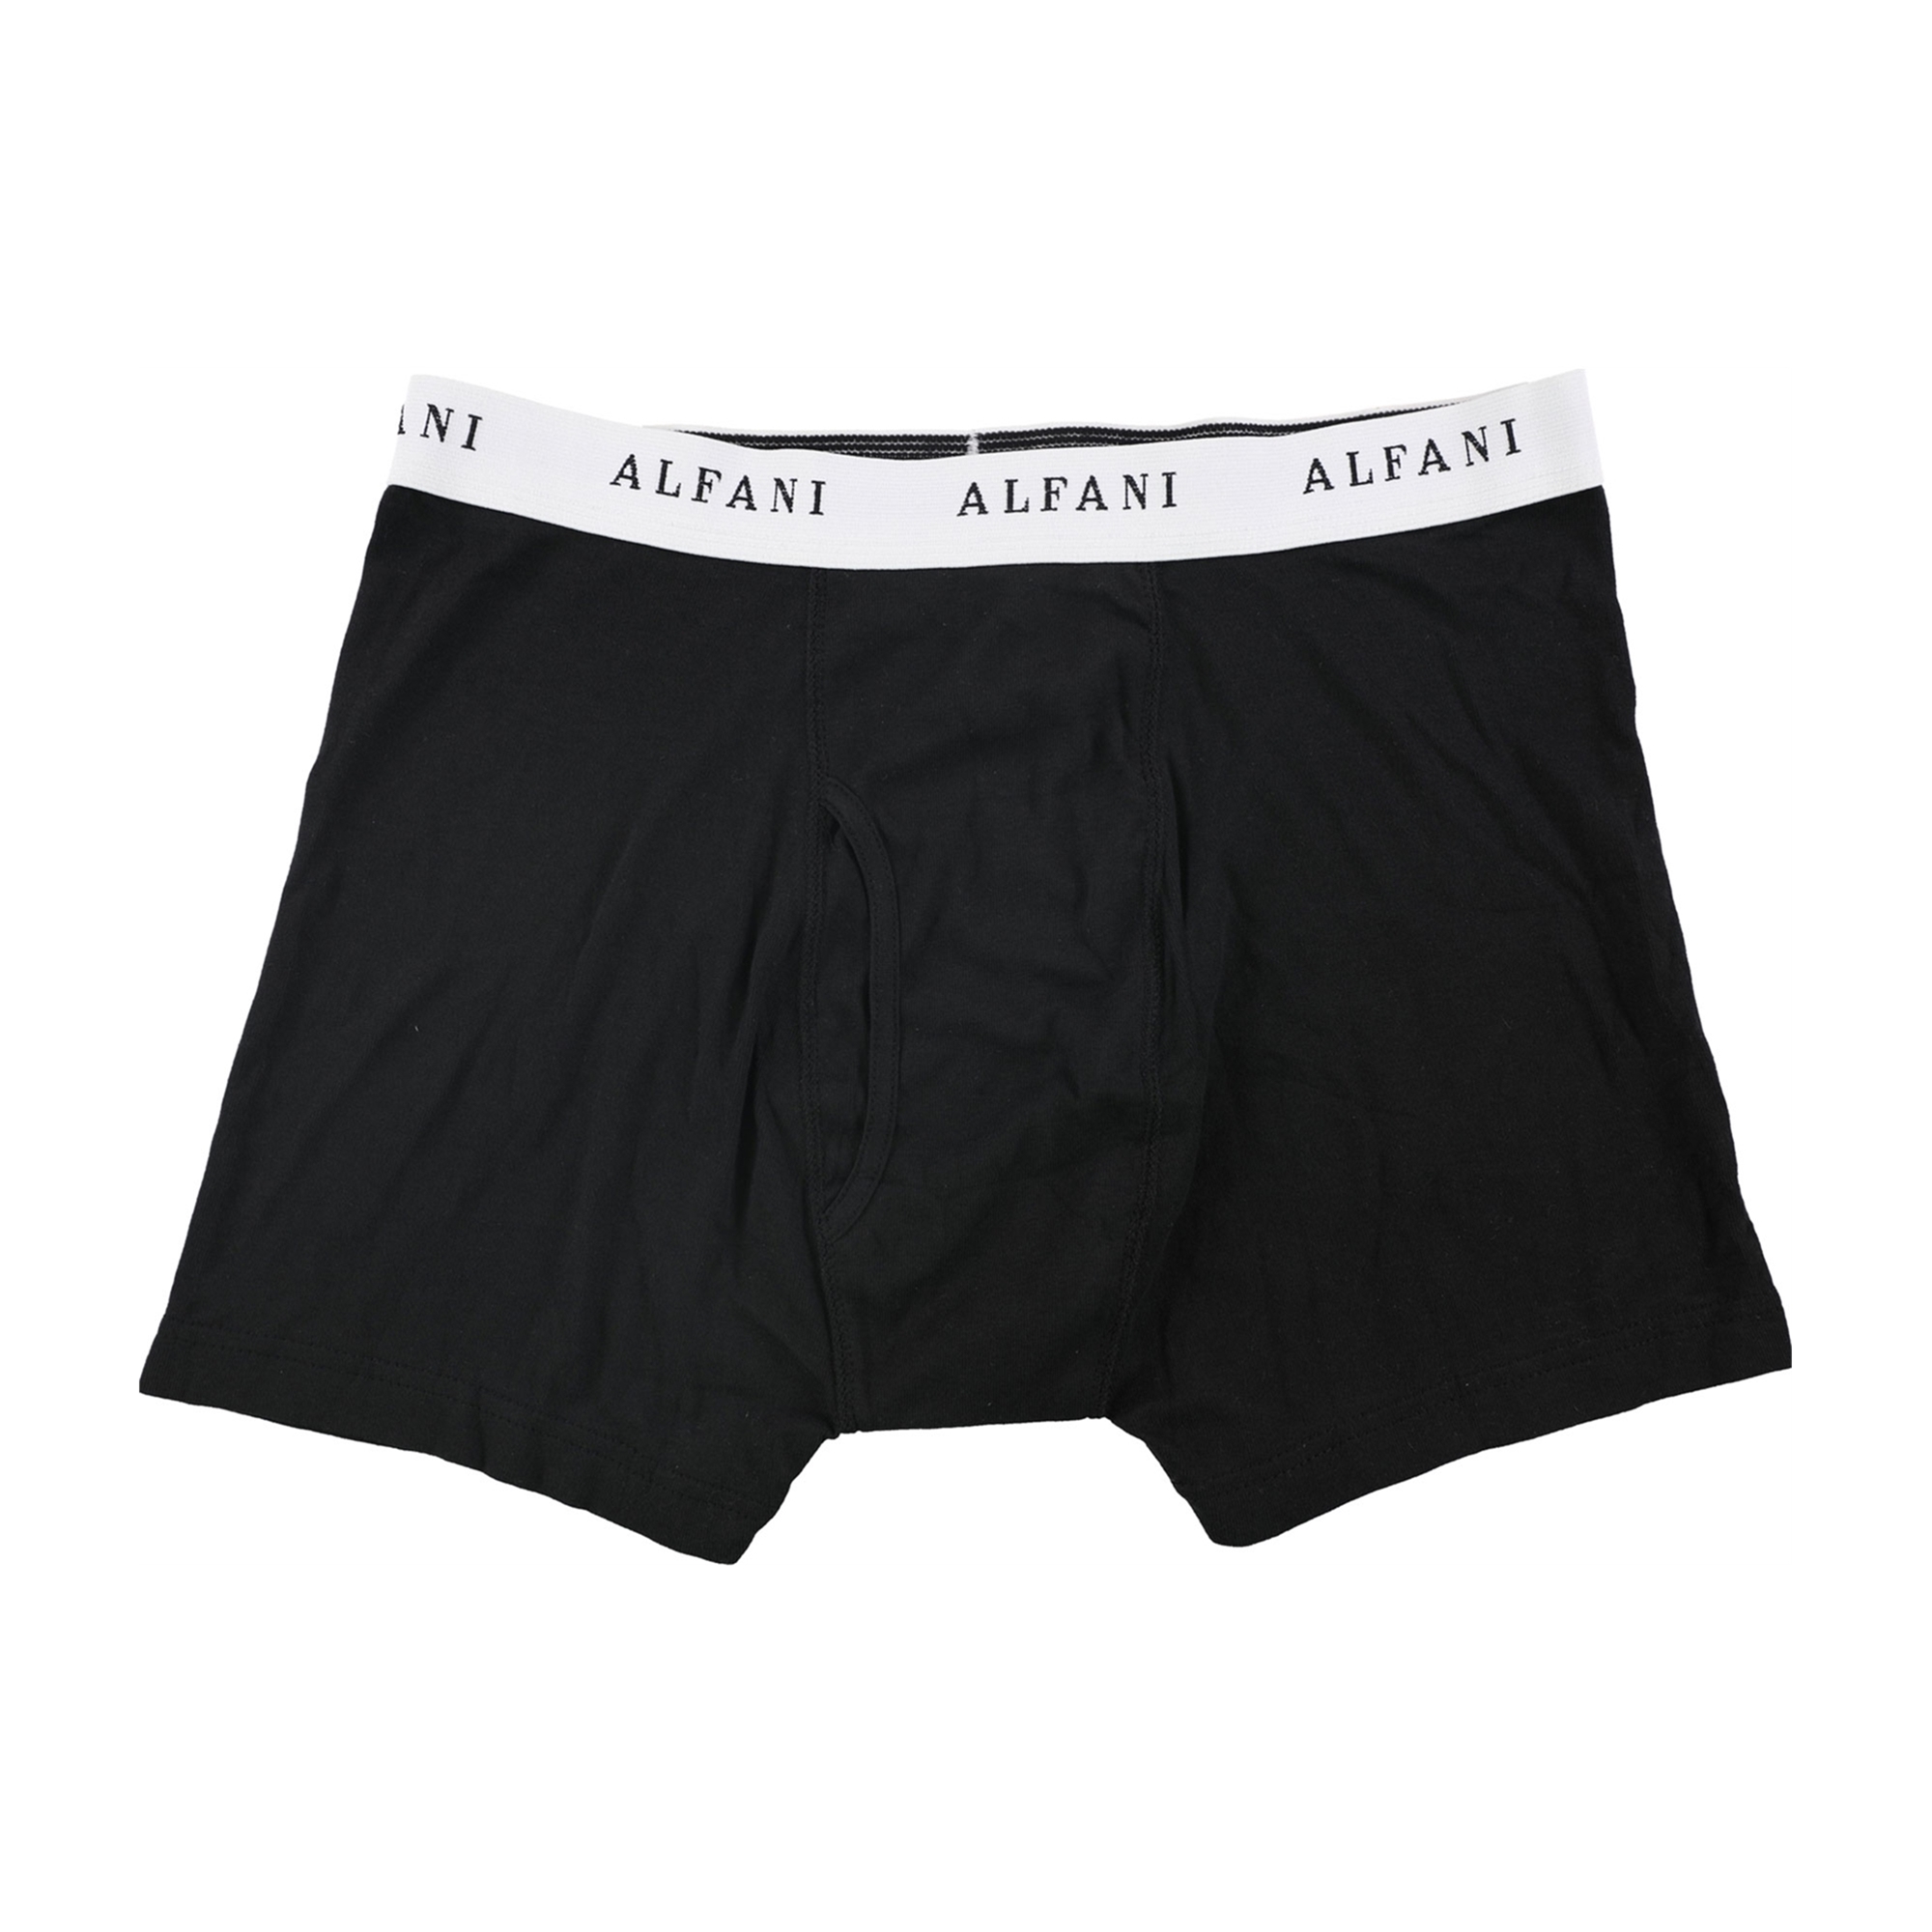 Alfani Men's Underwear & Undershirts - Kmart